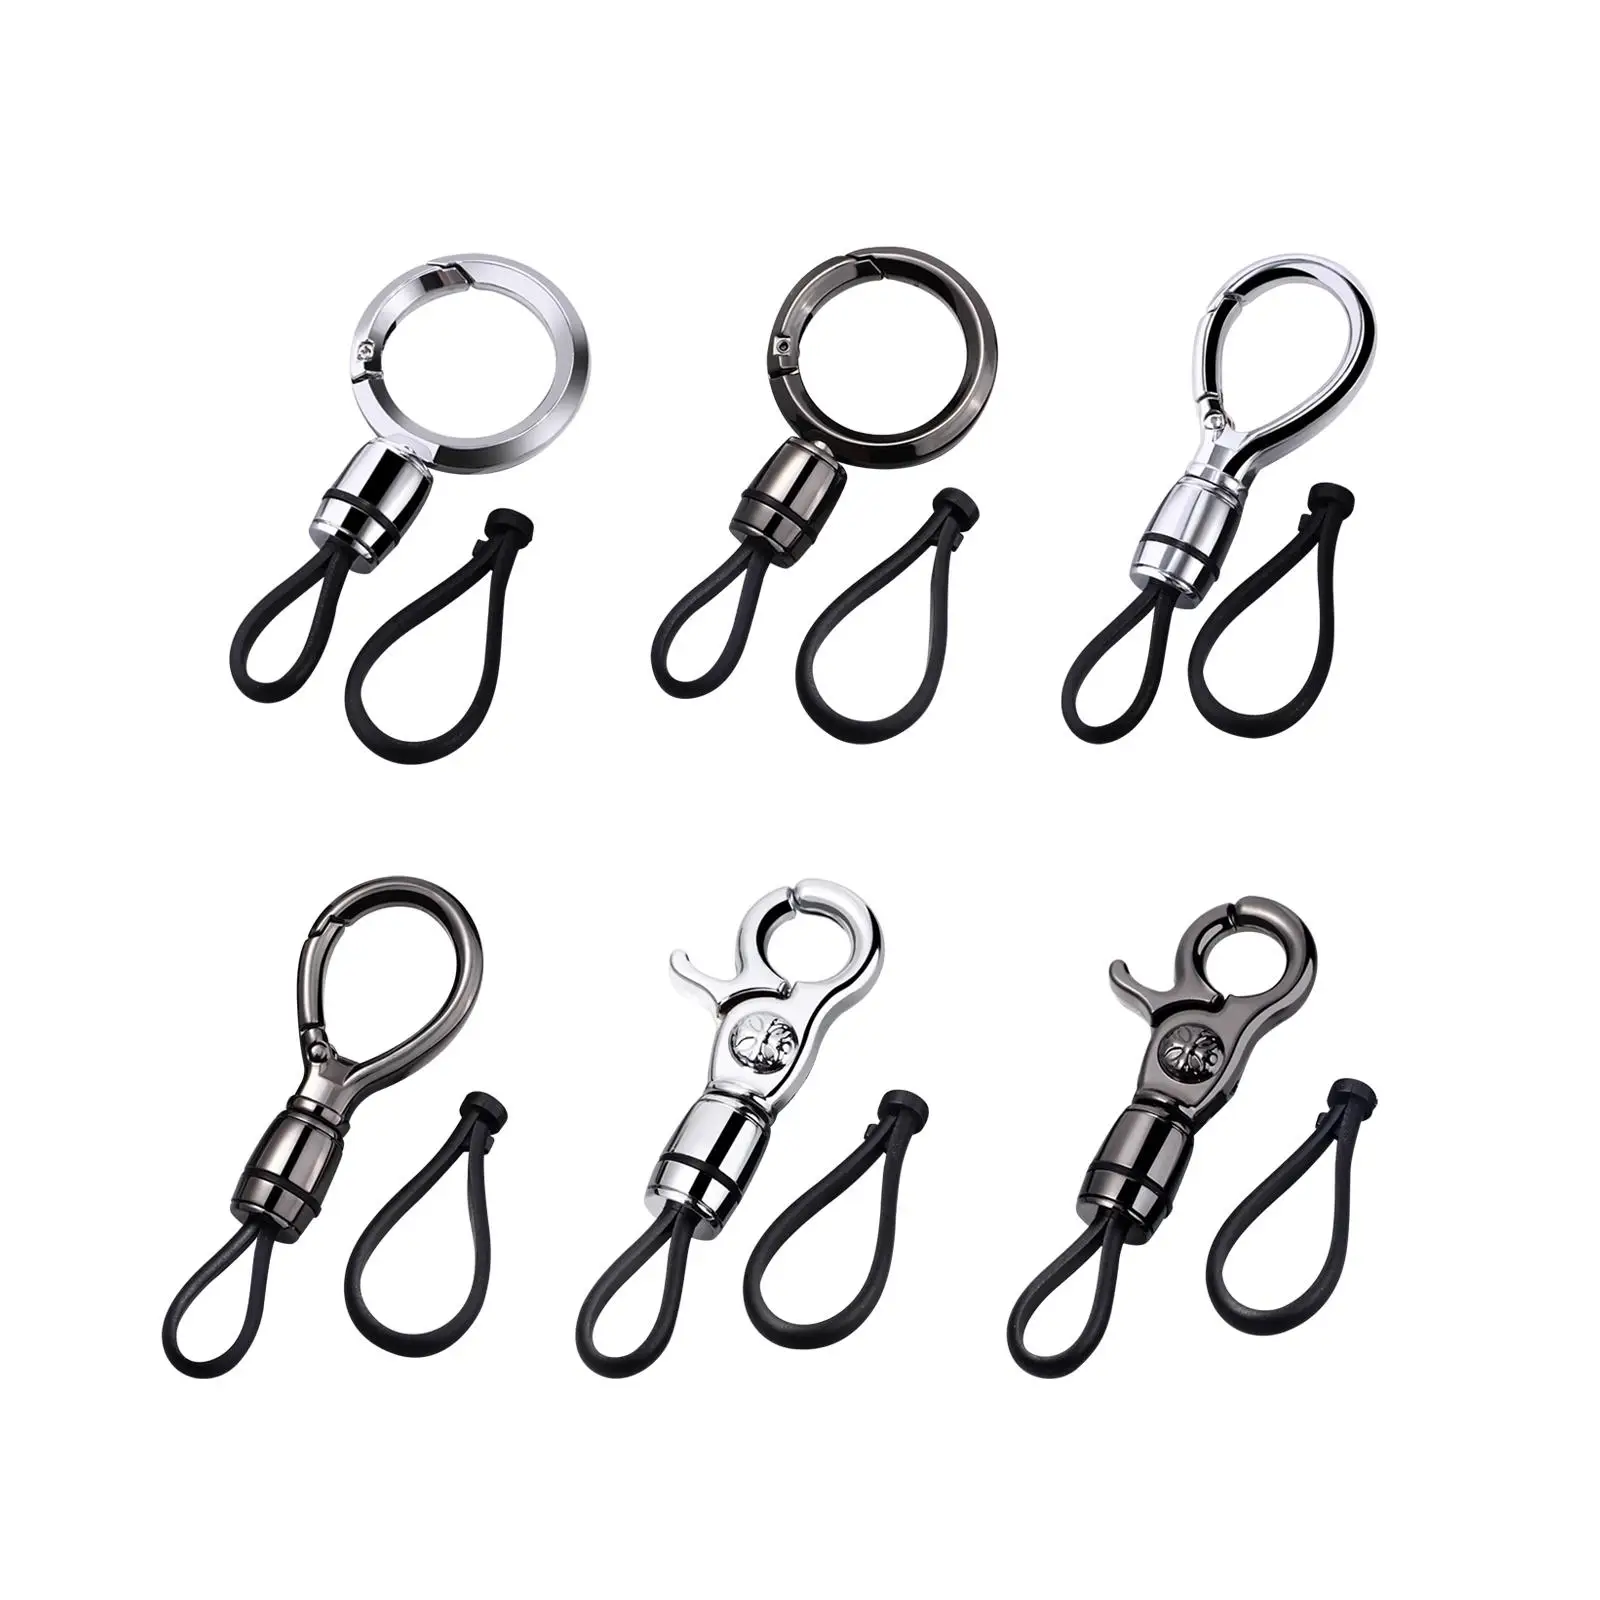 Car Key Chain Universal Key Ring Gift for Keys Backpack Camping Hiking Travailing Men and Women Husband Boyfriend Boys Girls